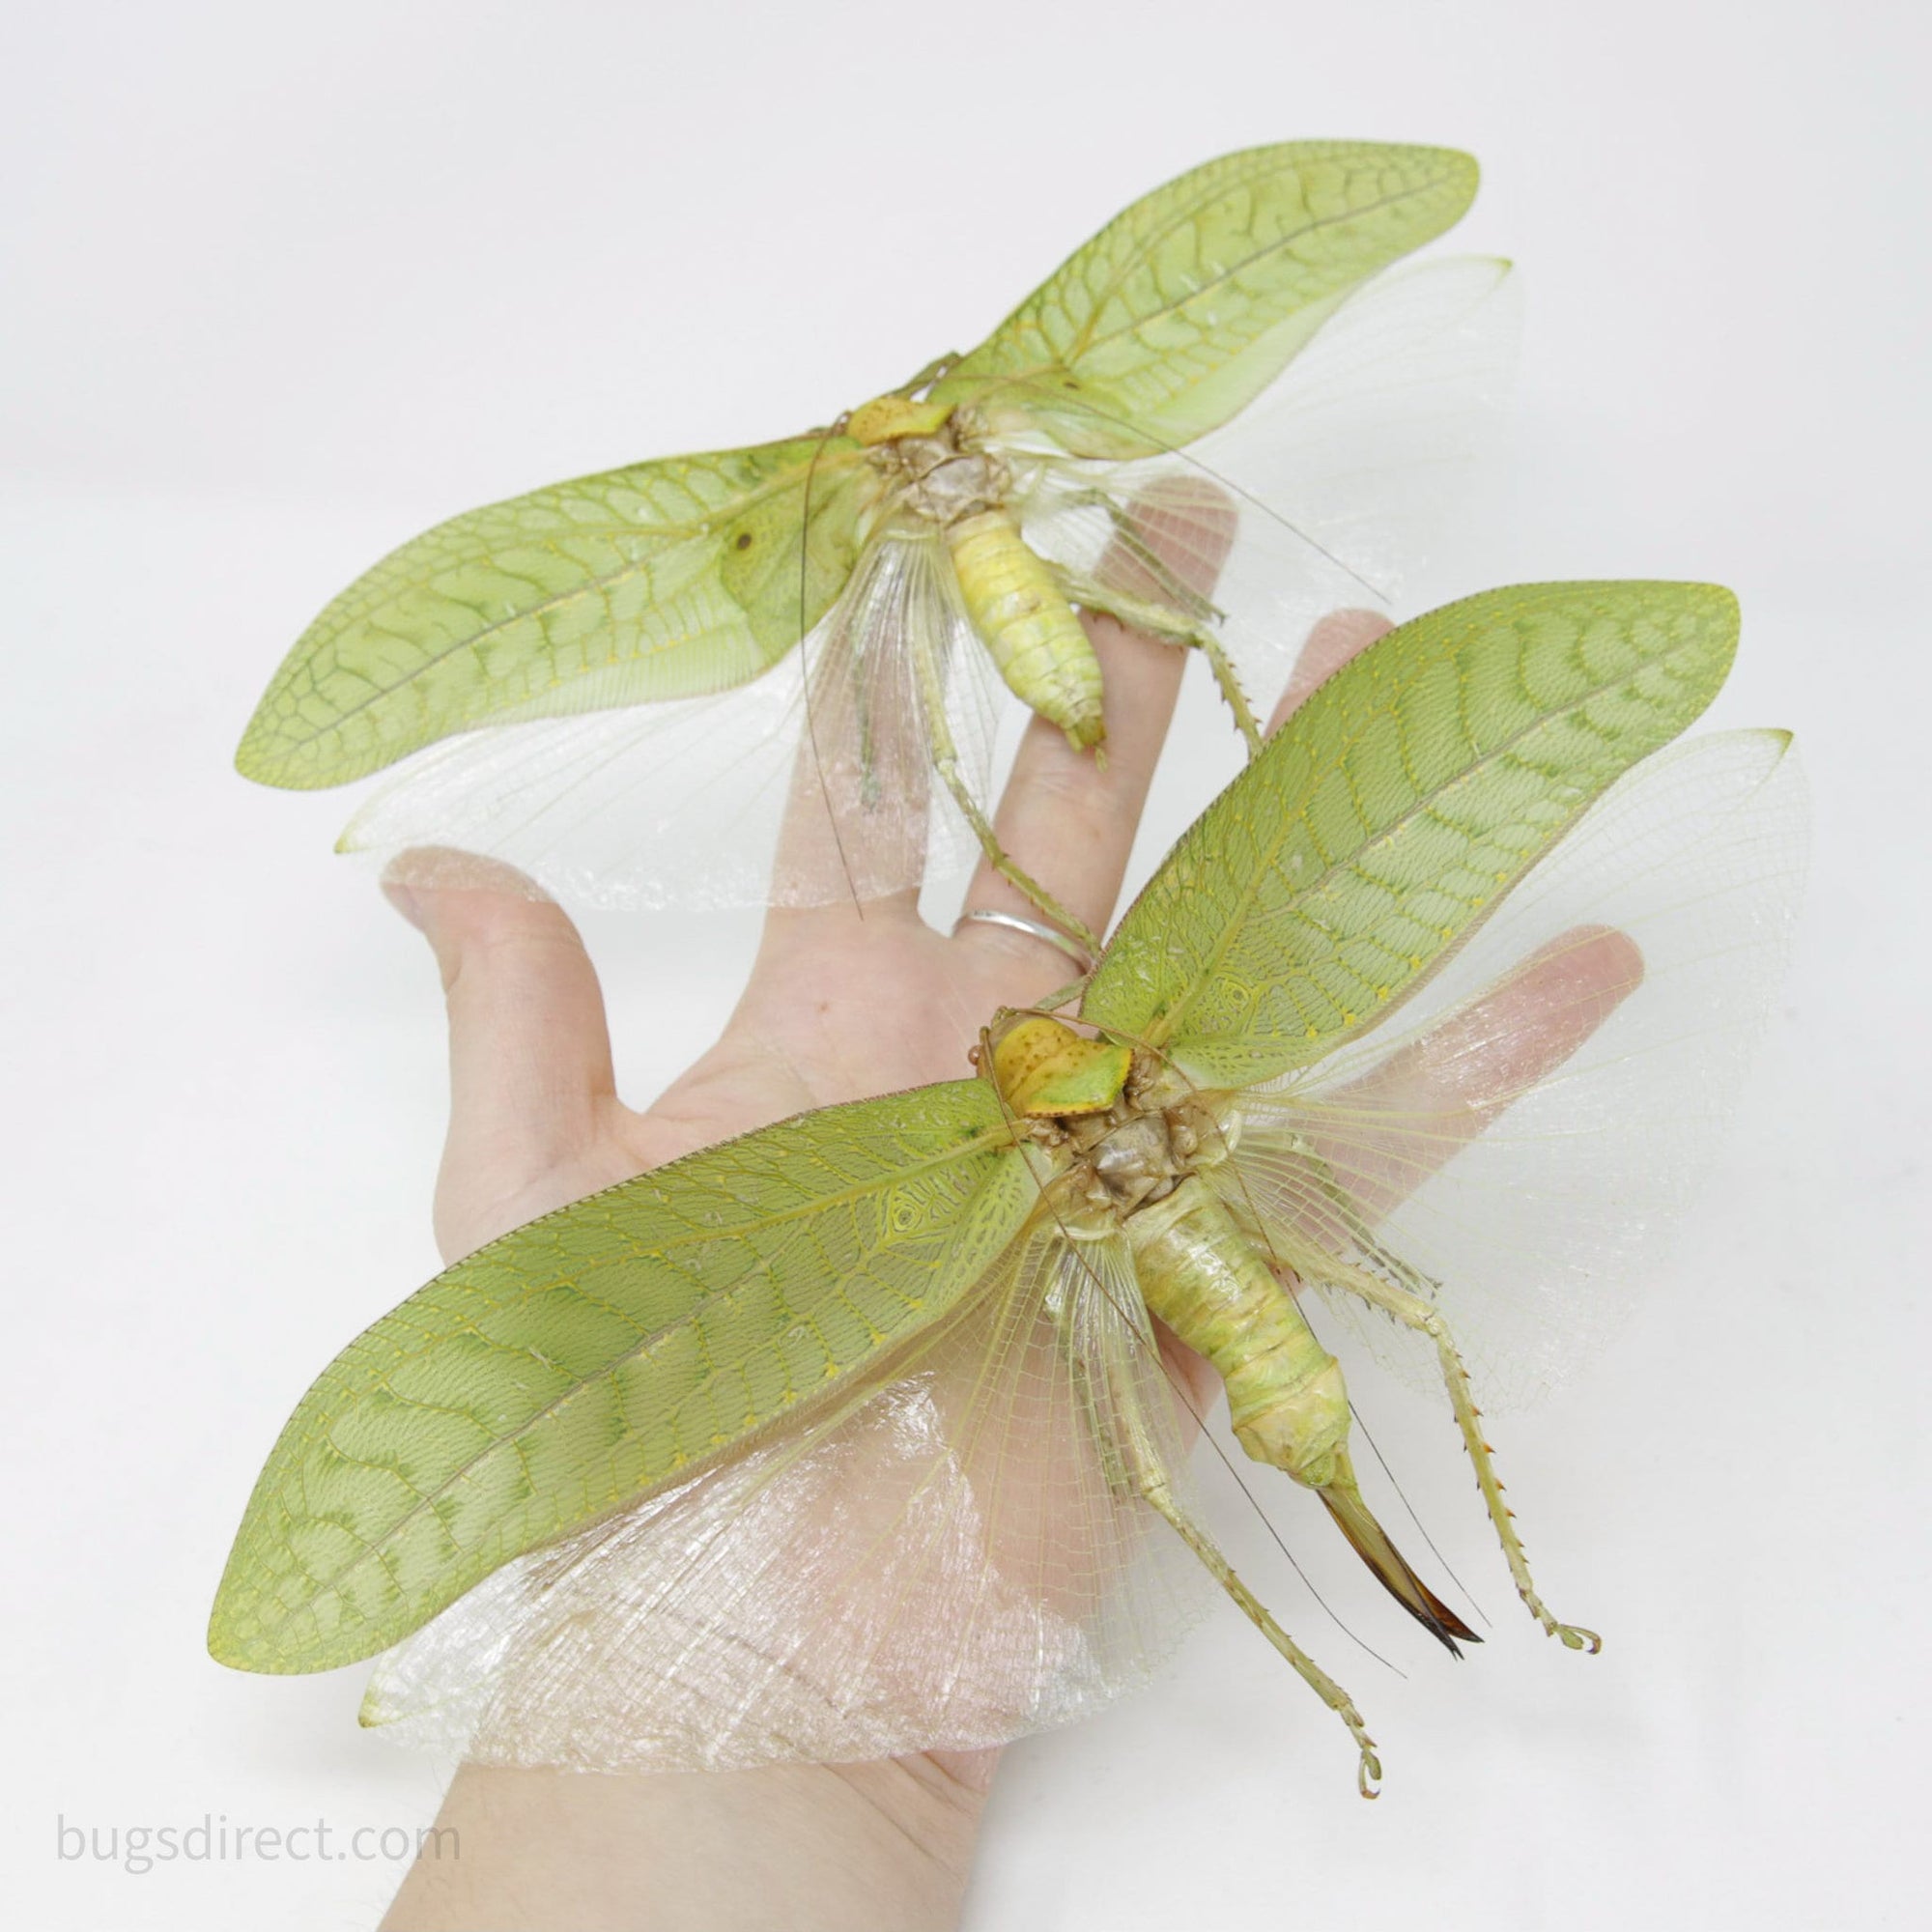 Pair of Hercules Leaf Mimic Katydids 8" Wingspan (Pseudophyllus hercules) Spread Specimens A1 Quality Real Insect Entomology